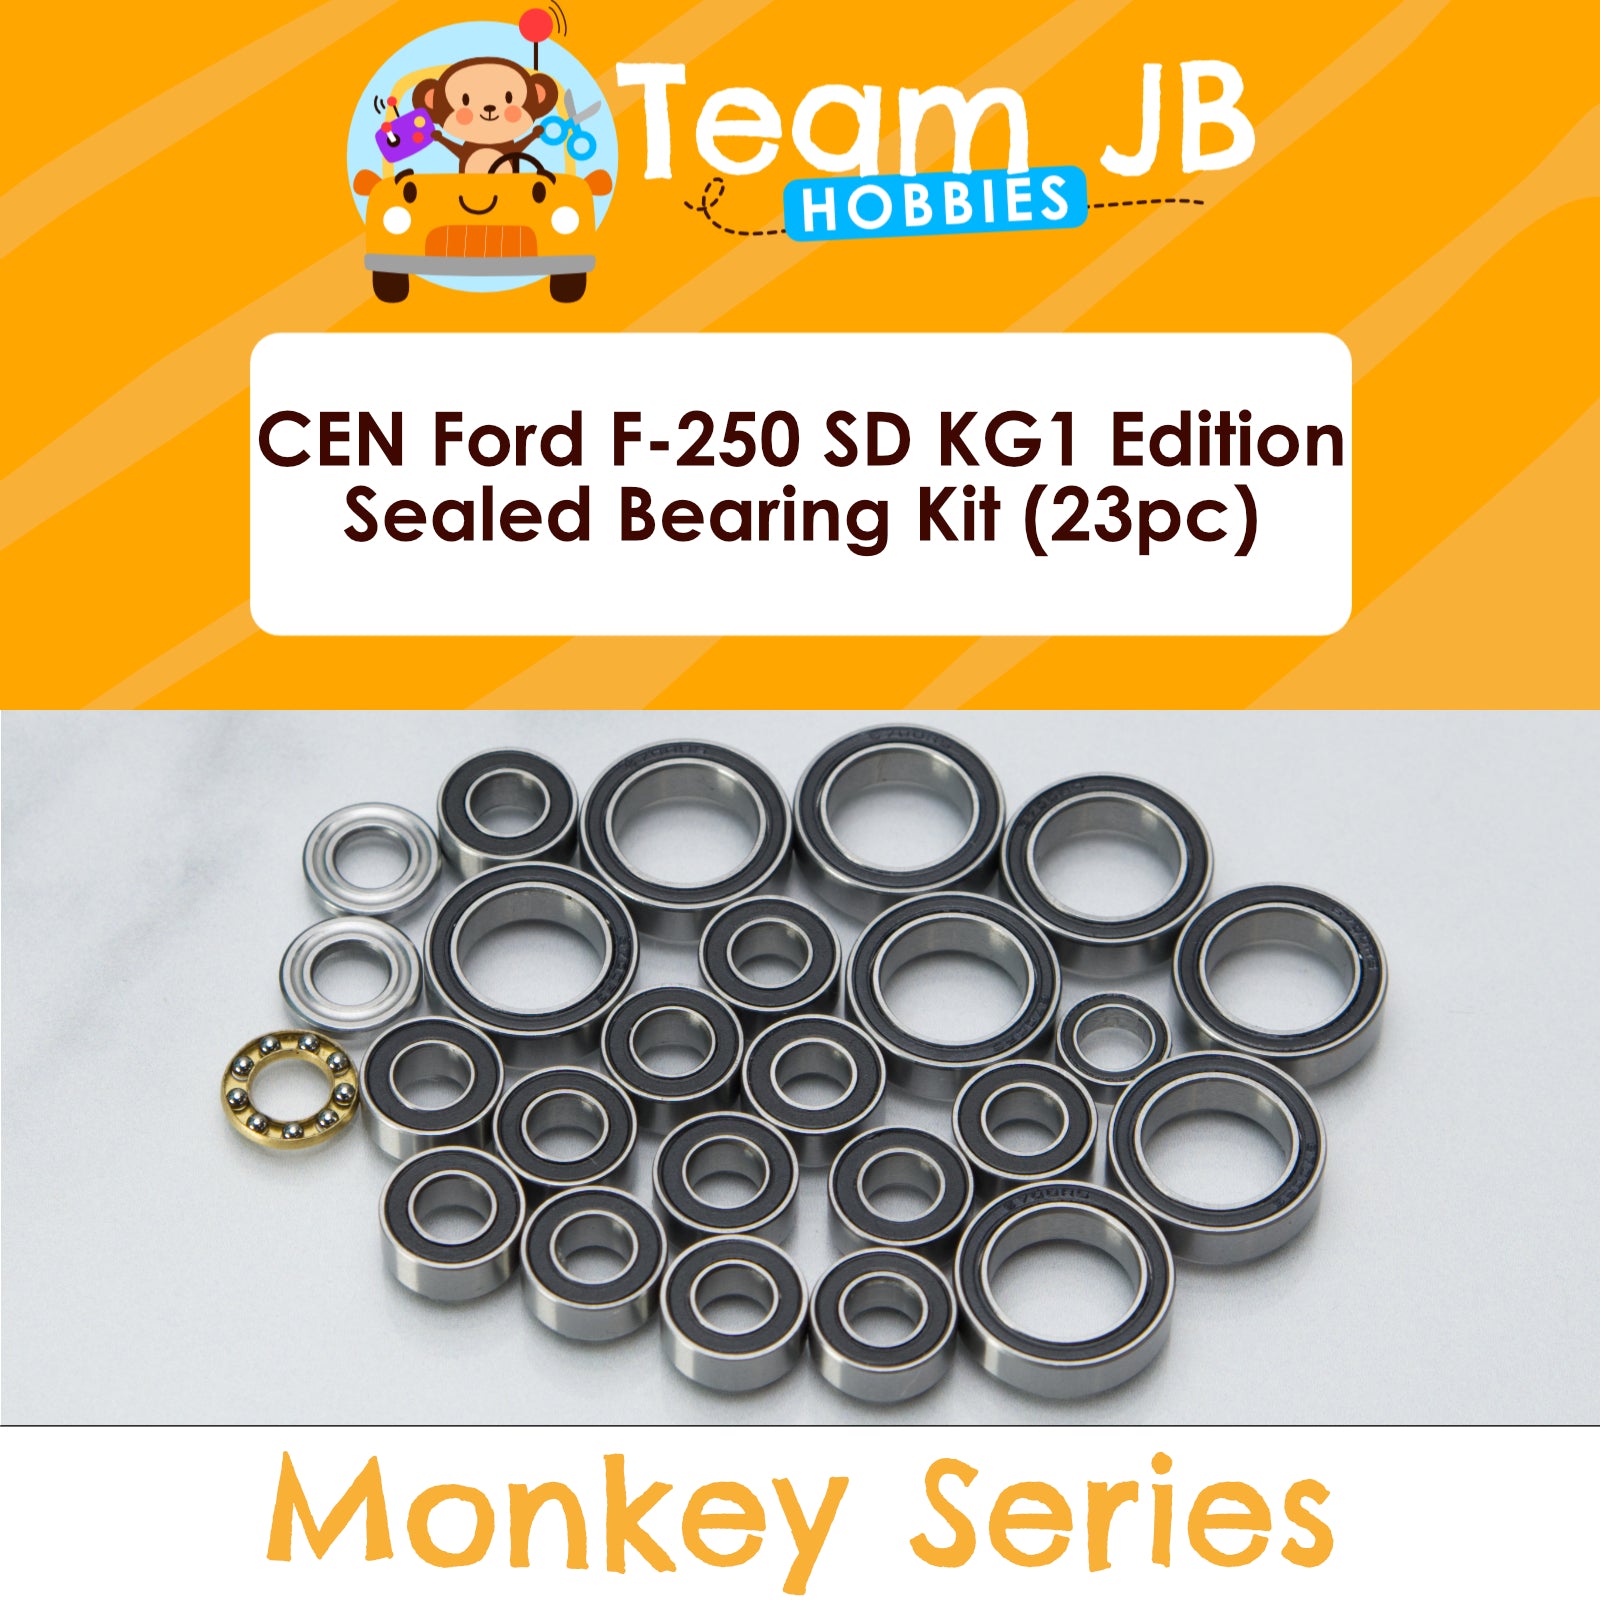 CEN Ford F-250 SD KG1 Edition - Sealed Bearing Kit